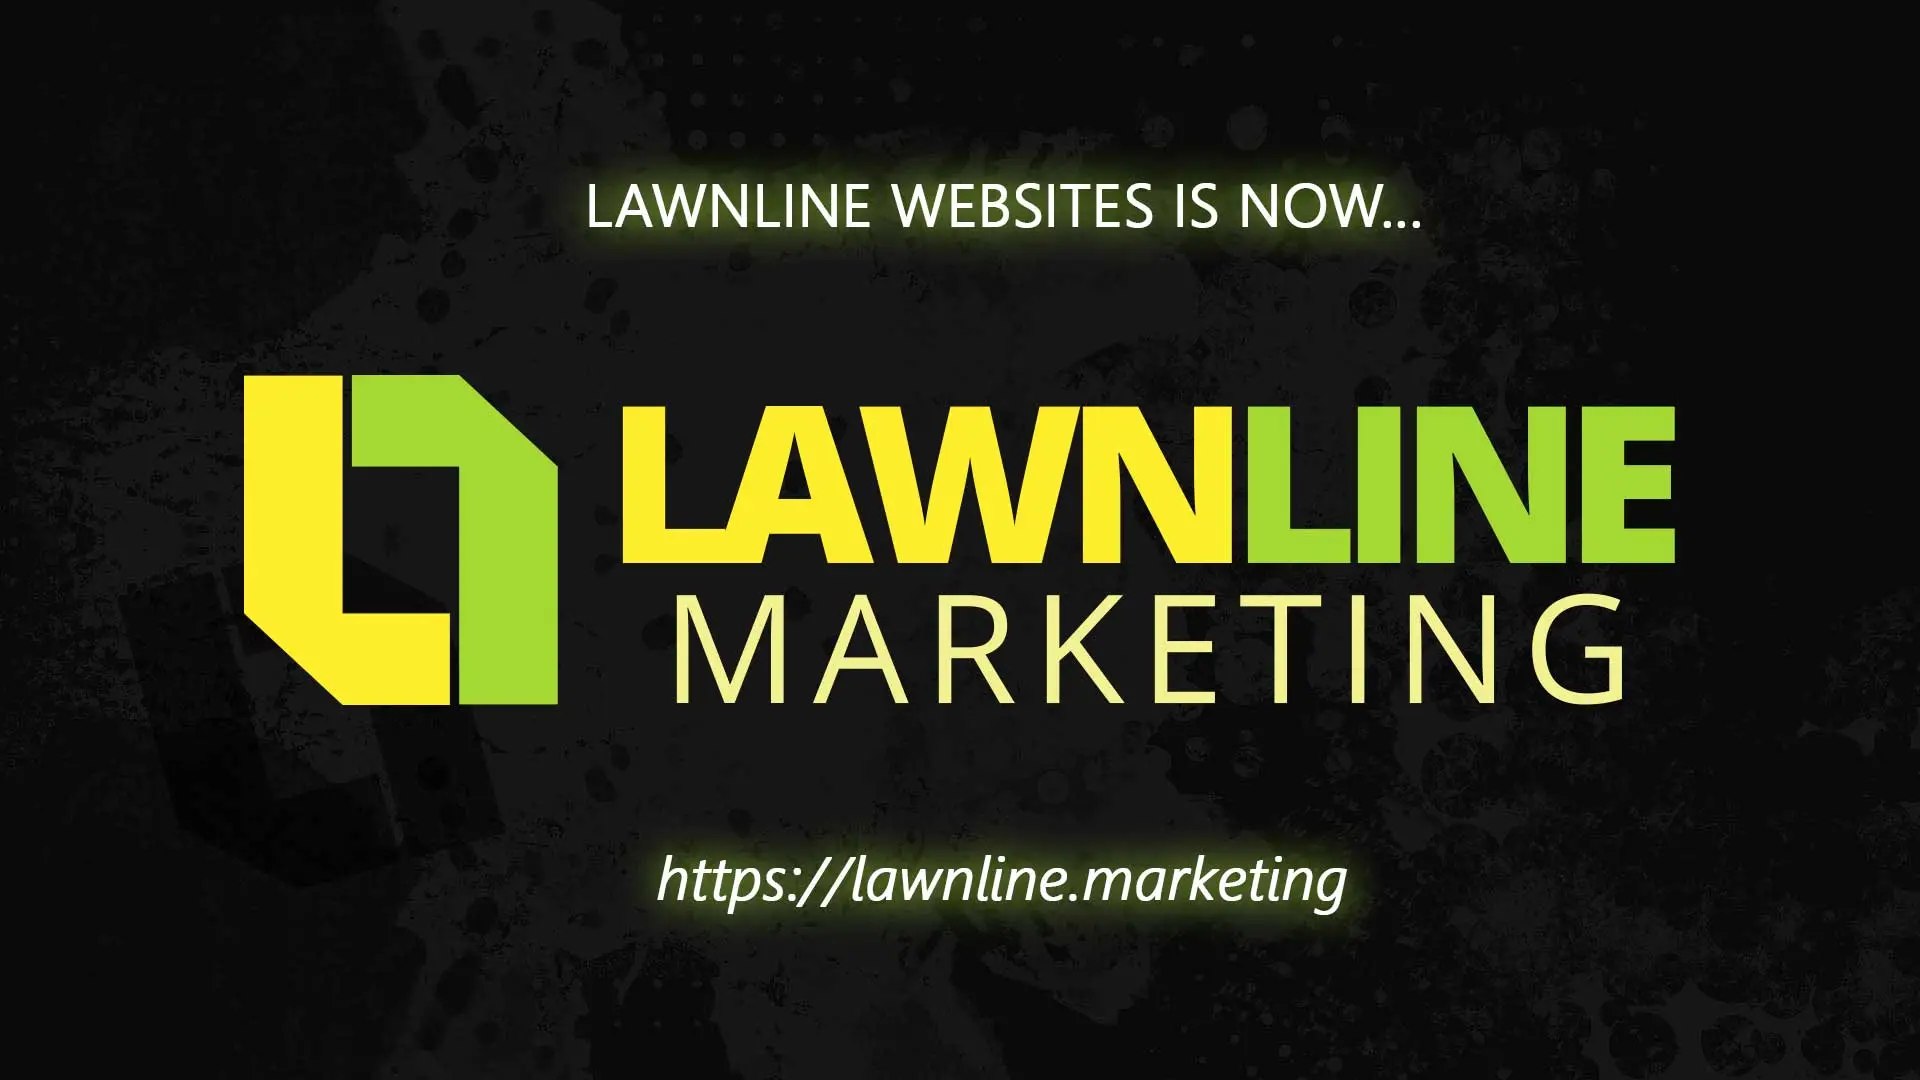 Press Release: Lawnline Website changes to Lawnline Marketing